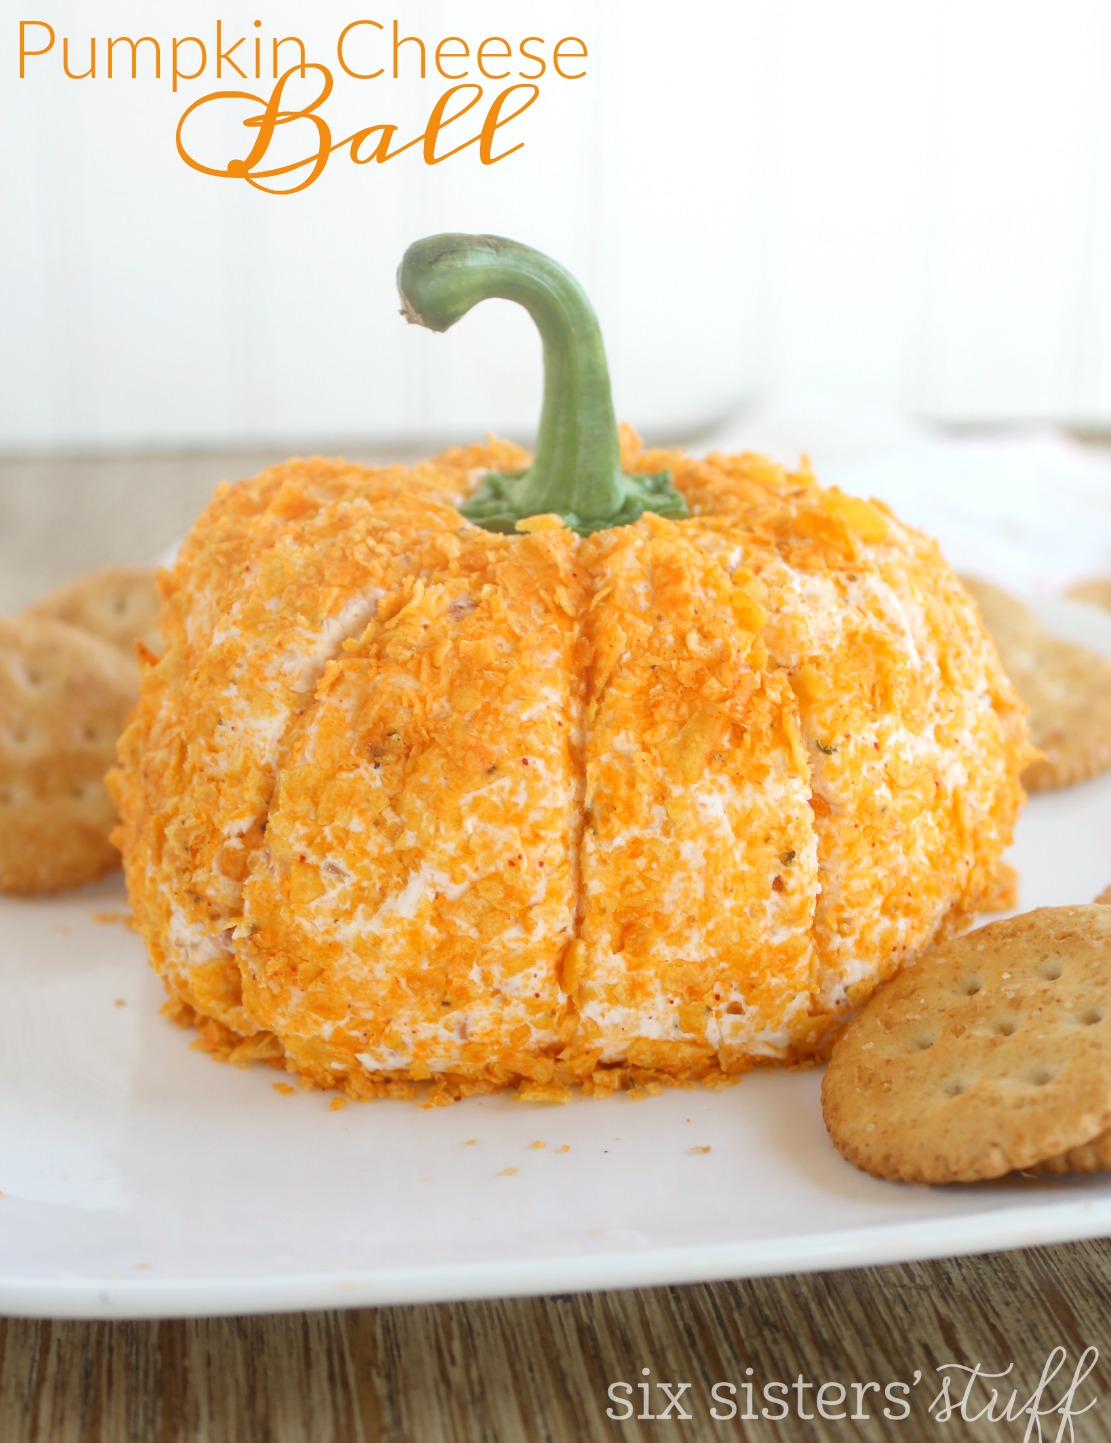 Pumpkin-Shaped Cheese Ball Recipe